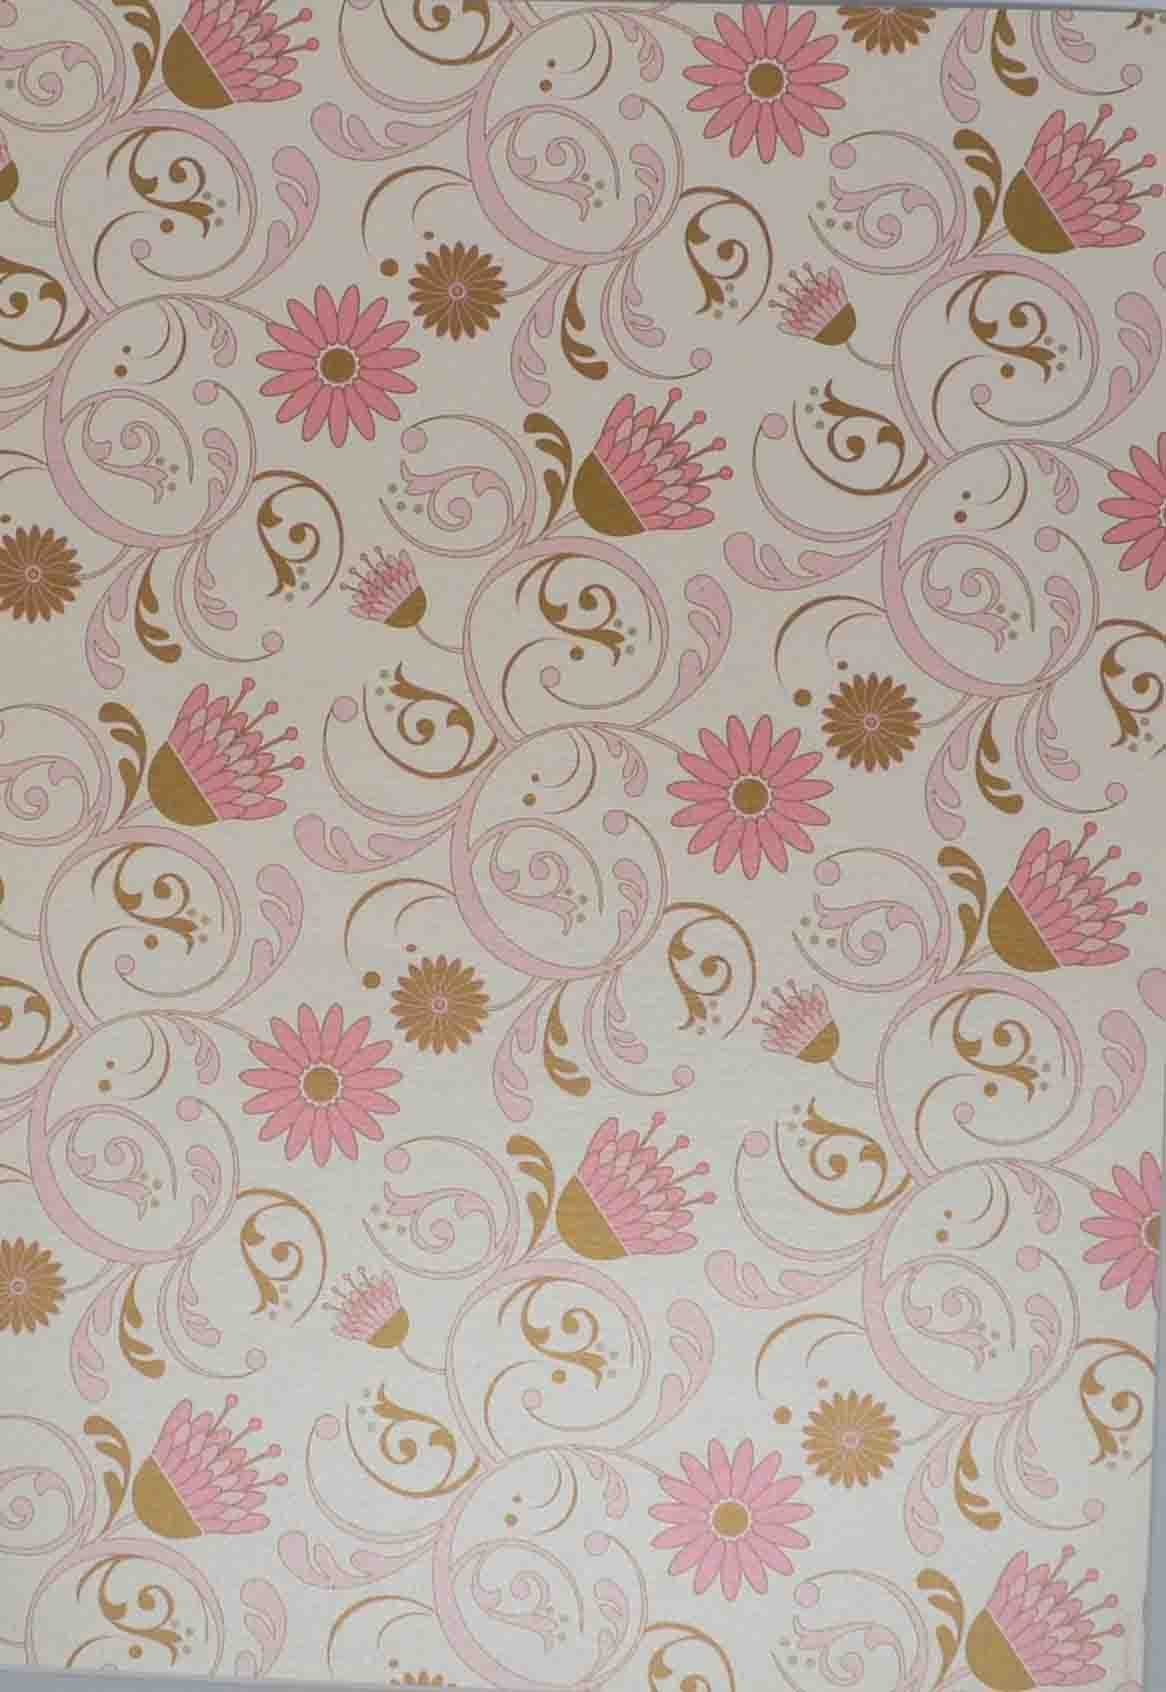 A4 - Patterned - Metallic Florentine Floral Pink - Gold/Pink on ...